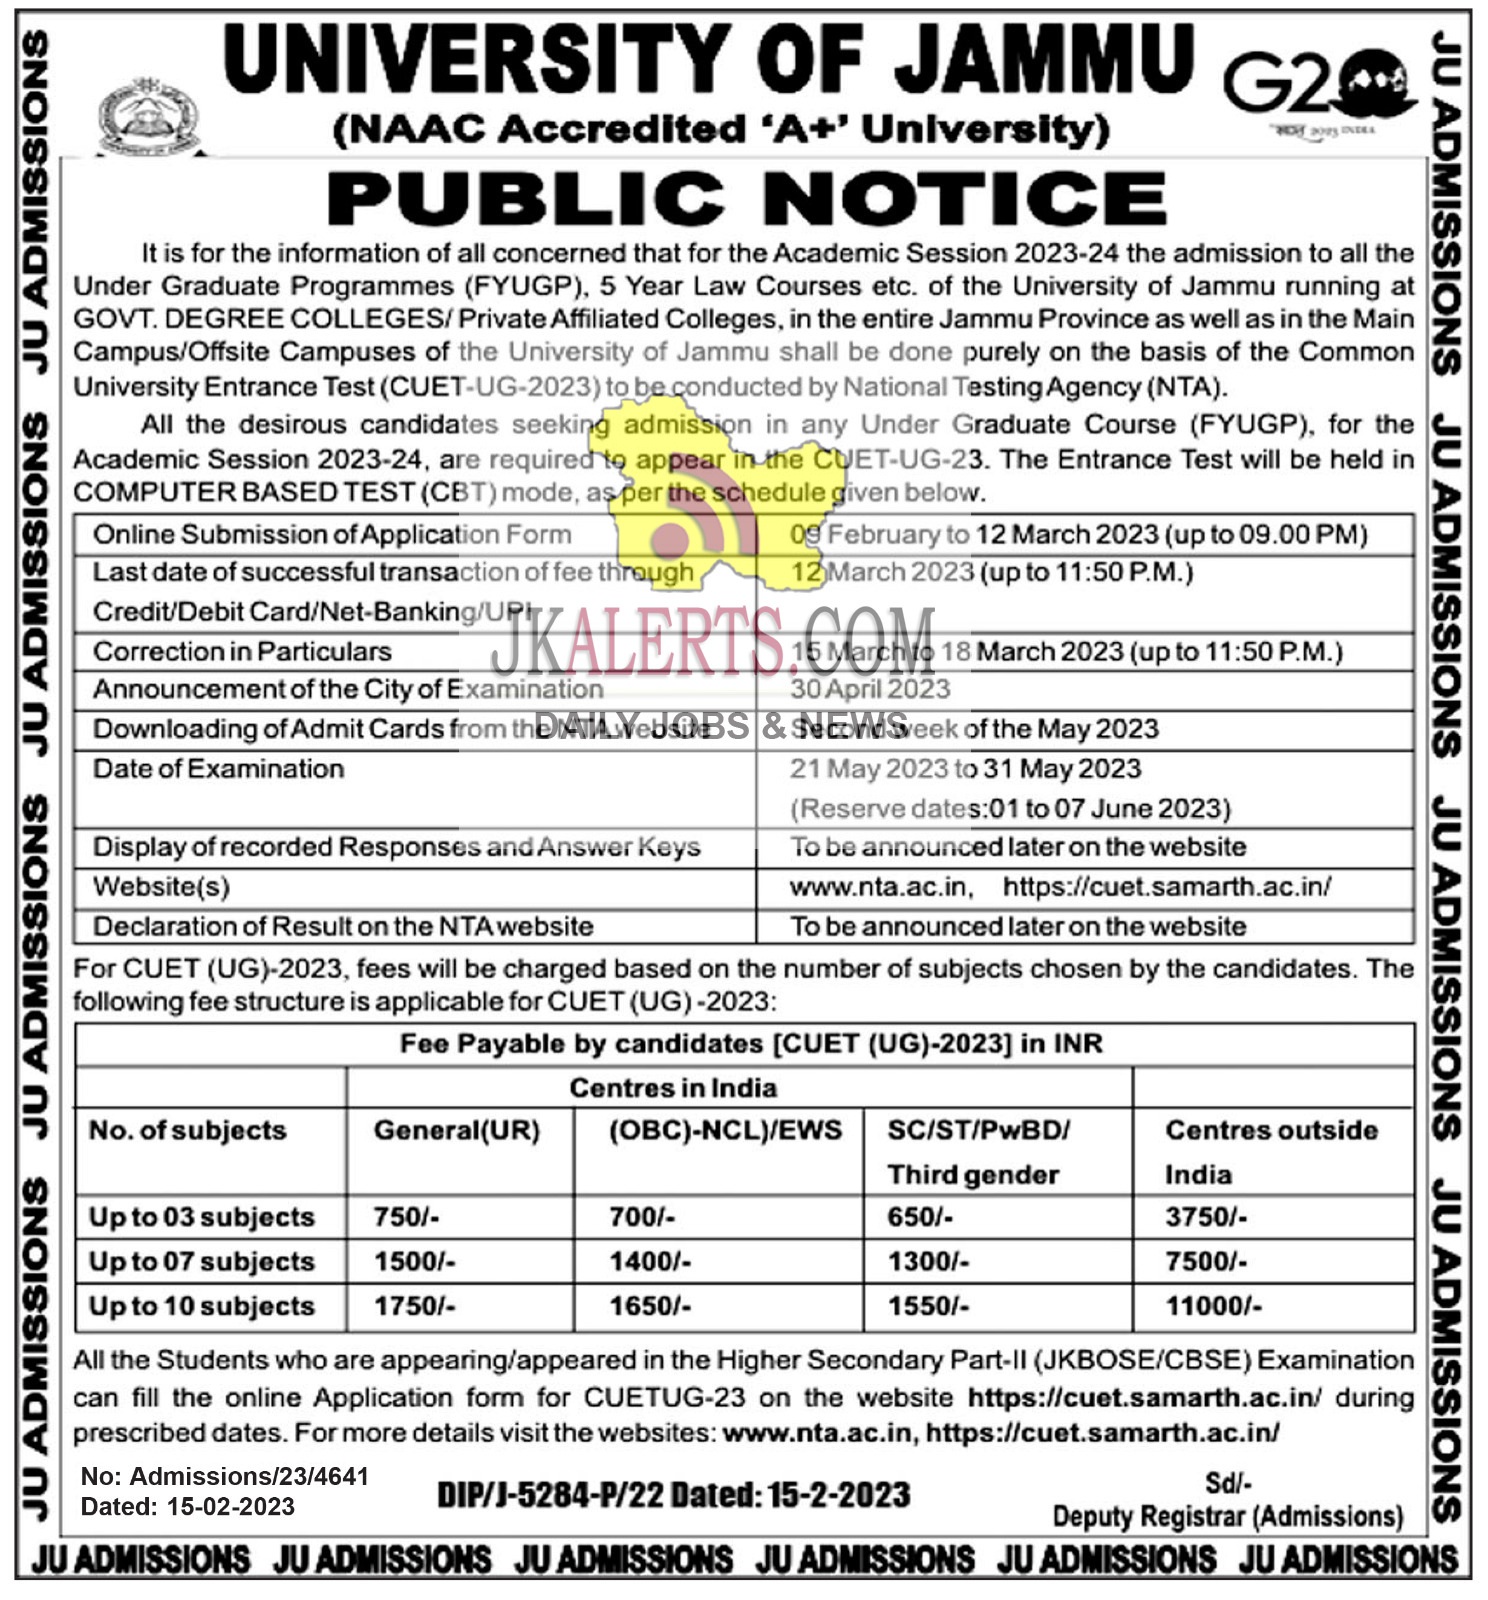 University of Jammu CUET-UG-2023 Entrance Test.